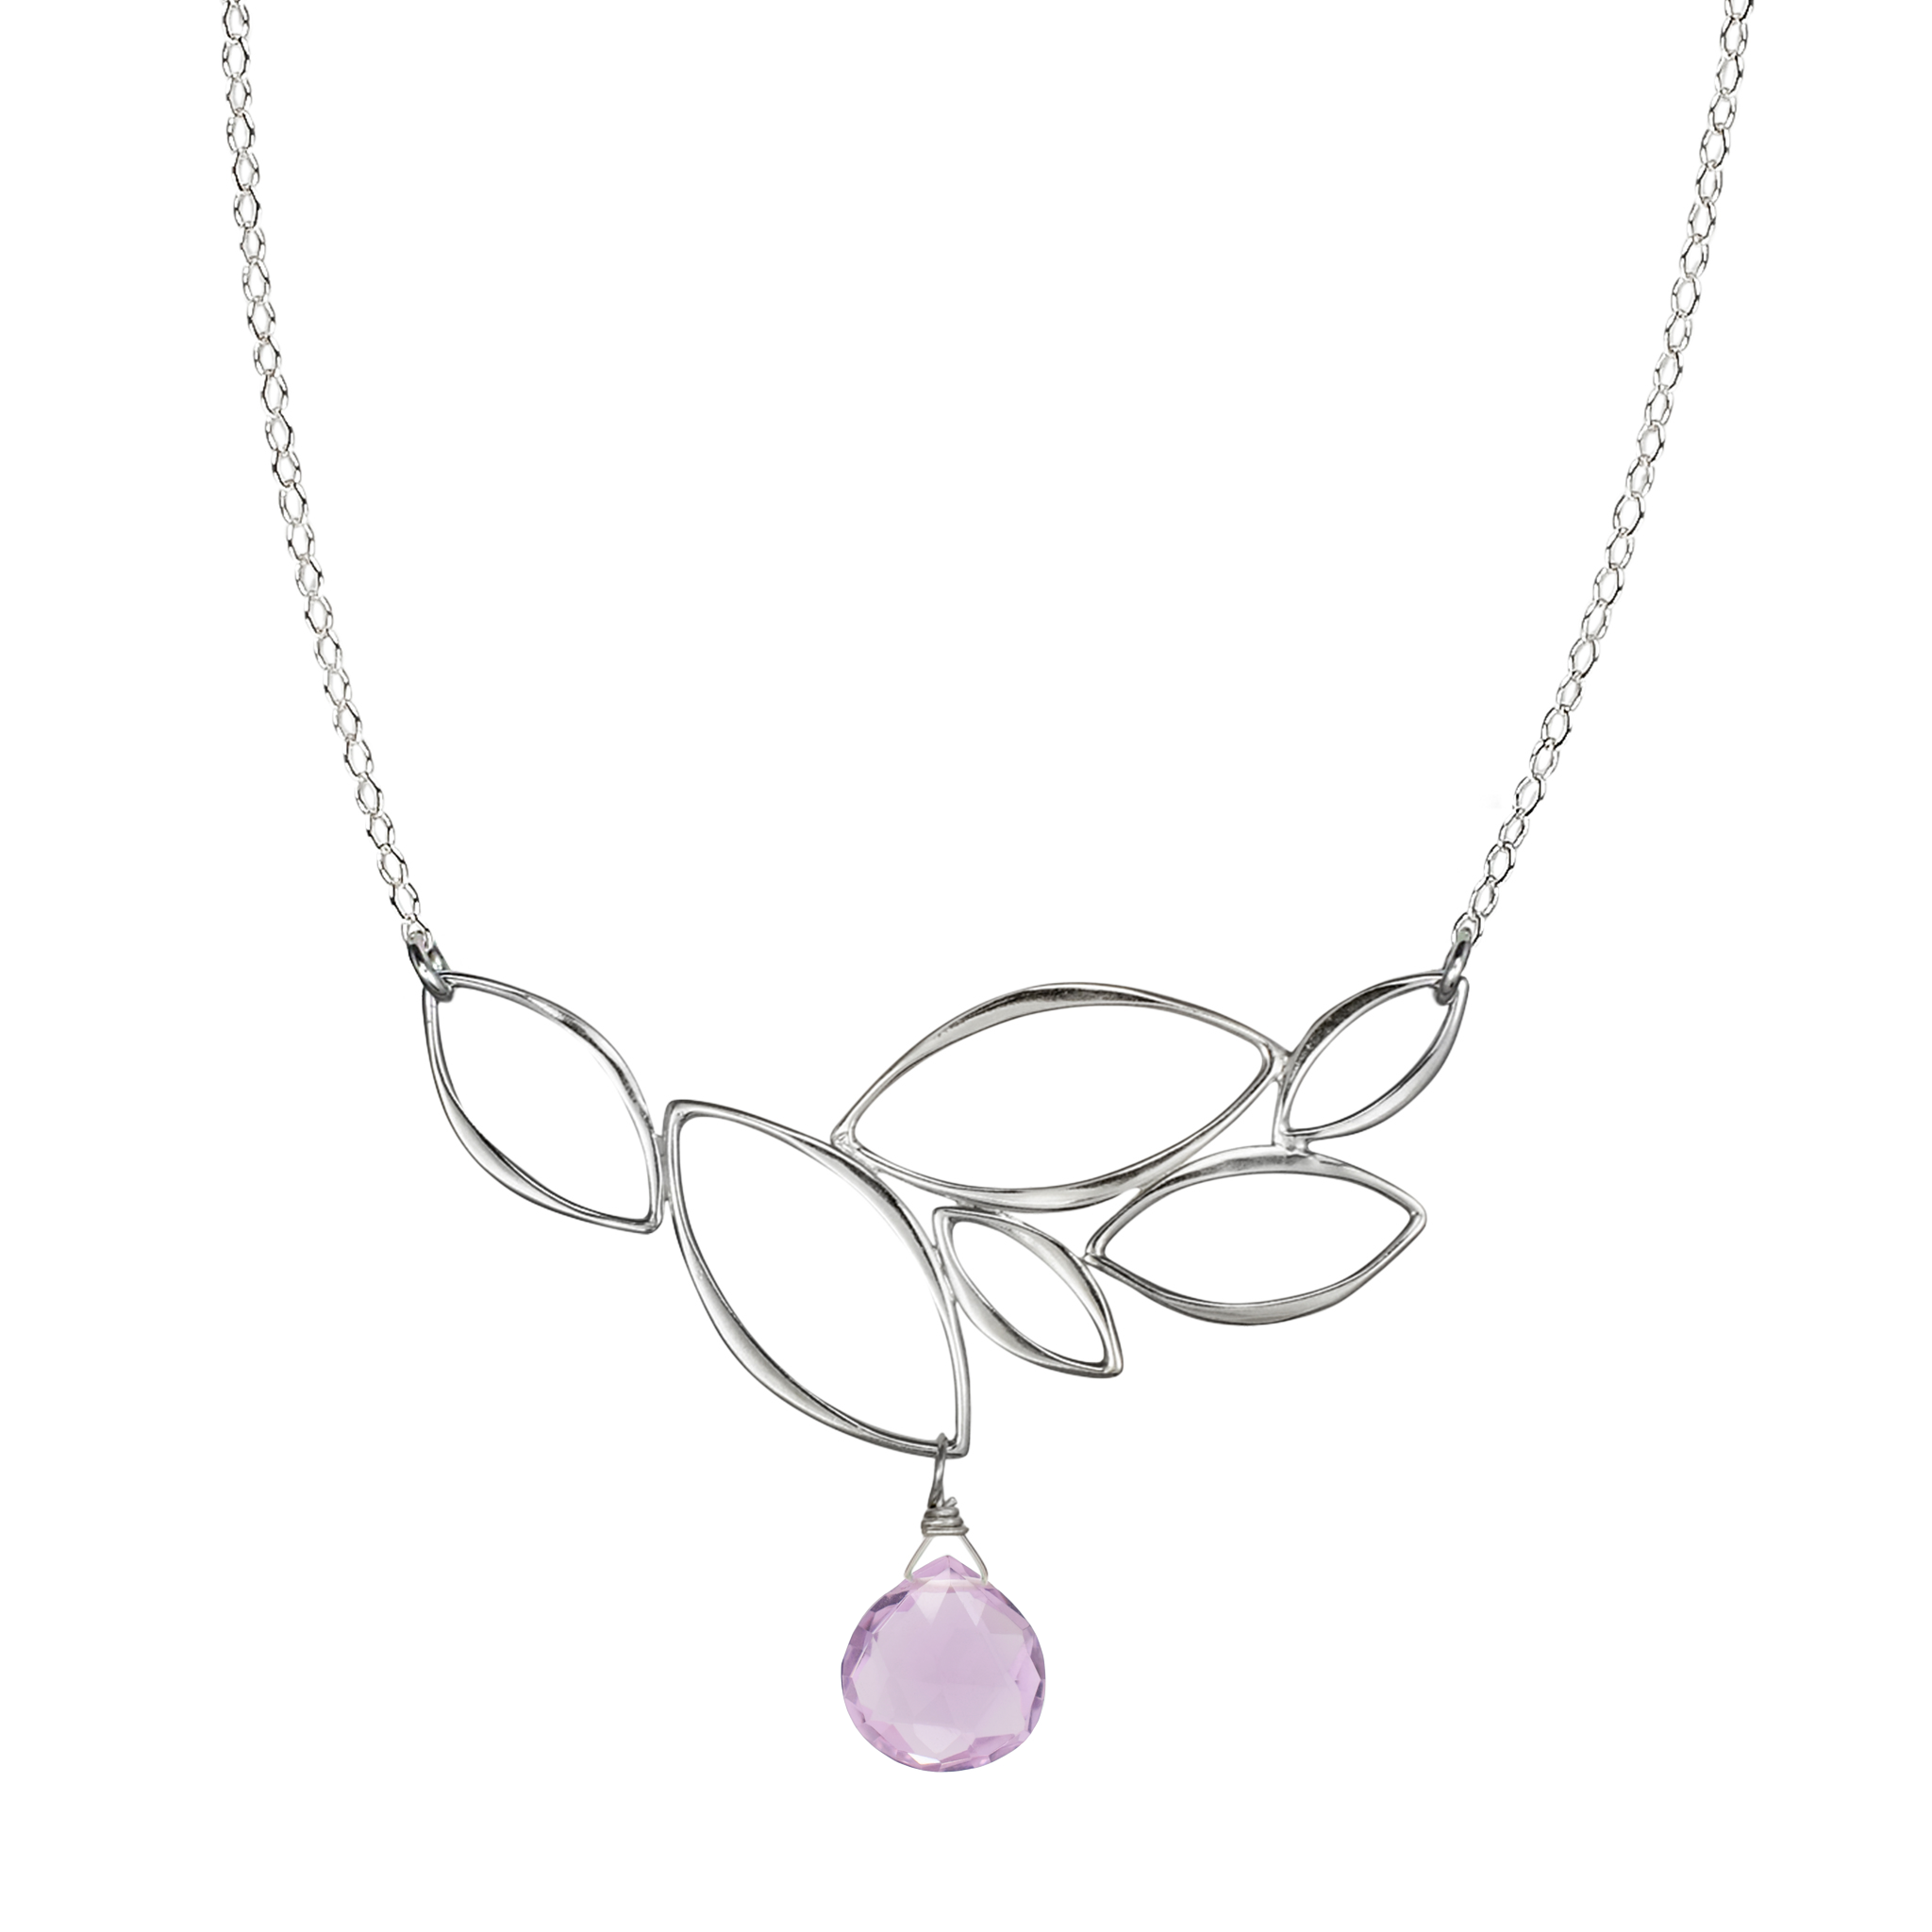 Ella Silver Leaf Cluster Necklace with Gemstone